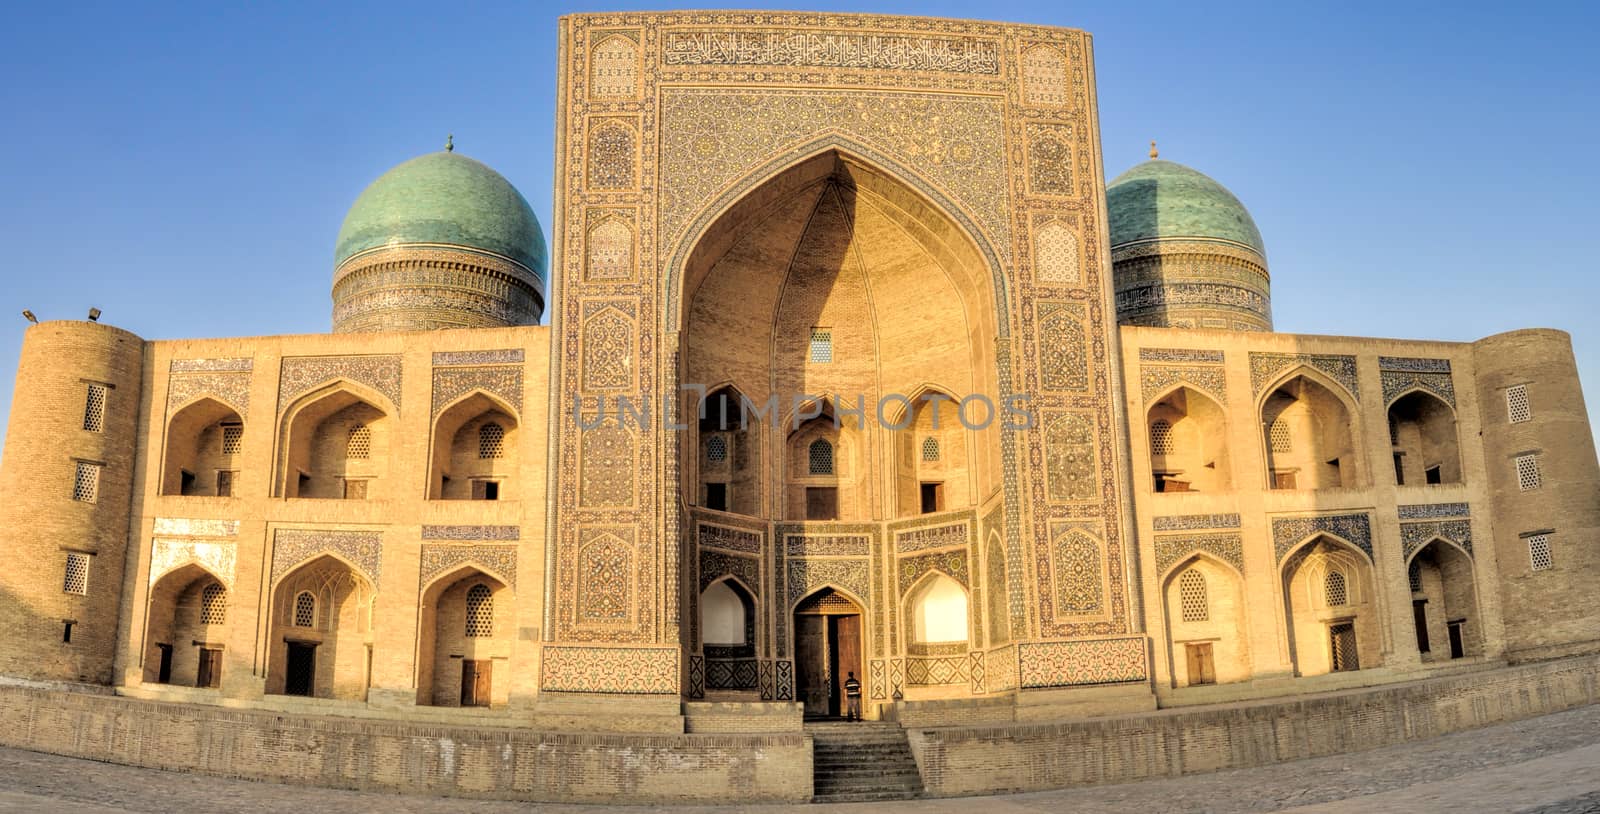 Picturesque view of the entrance to Abdulaziz Khan Madrassah (Museum of Wood Carving Art), Uzbekistan